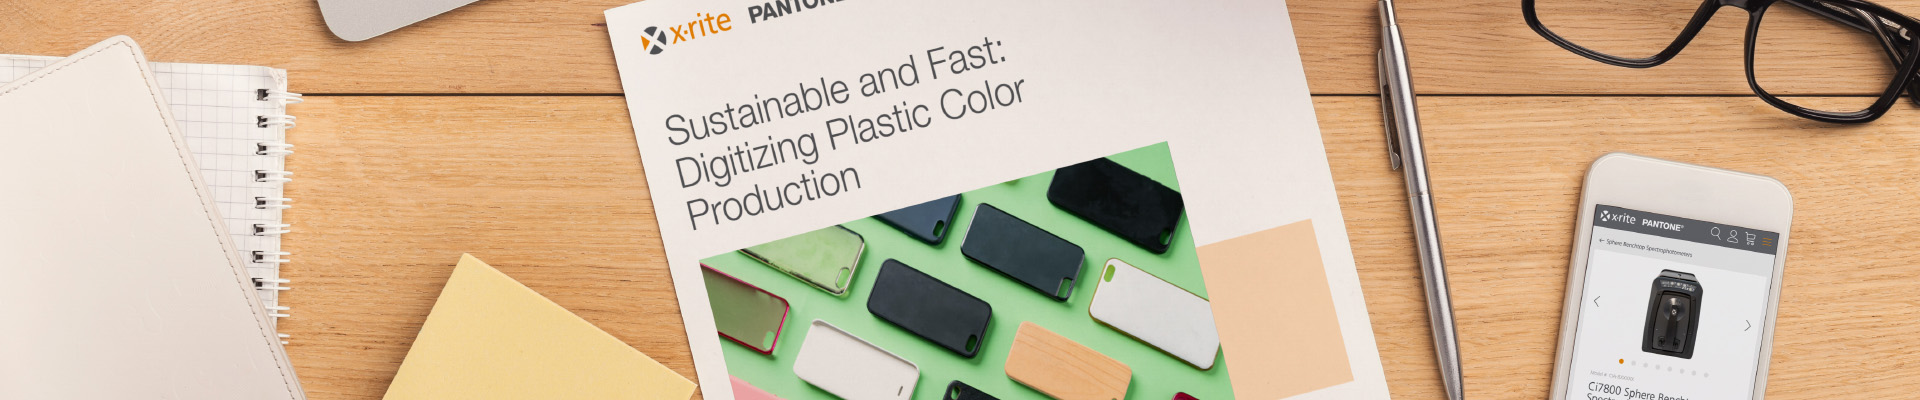 Digitizing the Plastics Workflow | Plastic Color Production | X-Rite